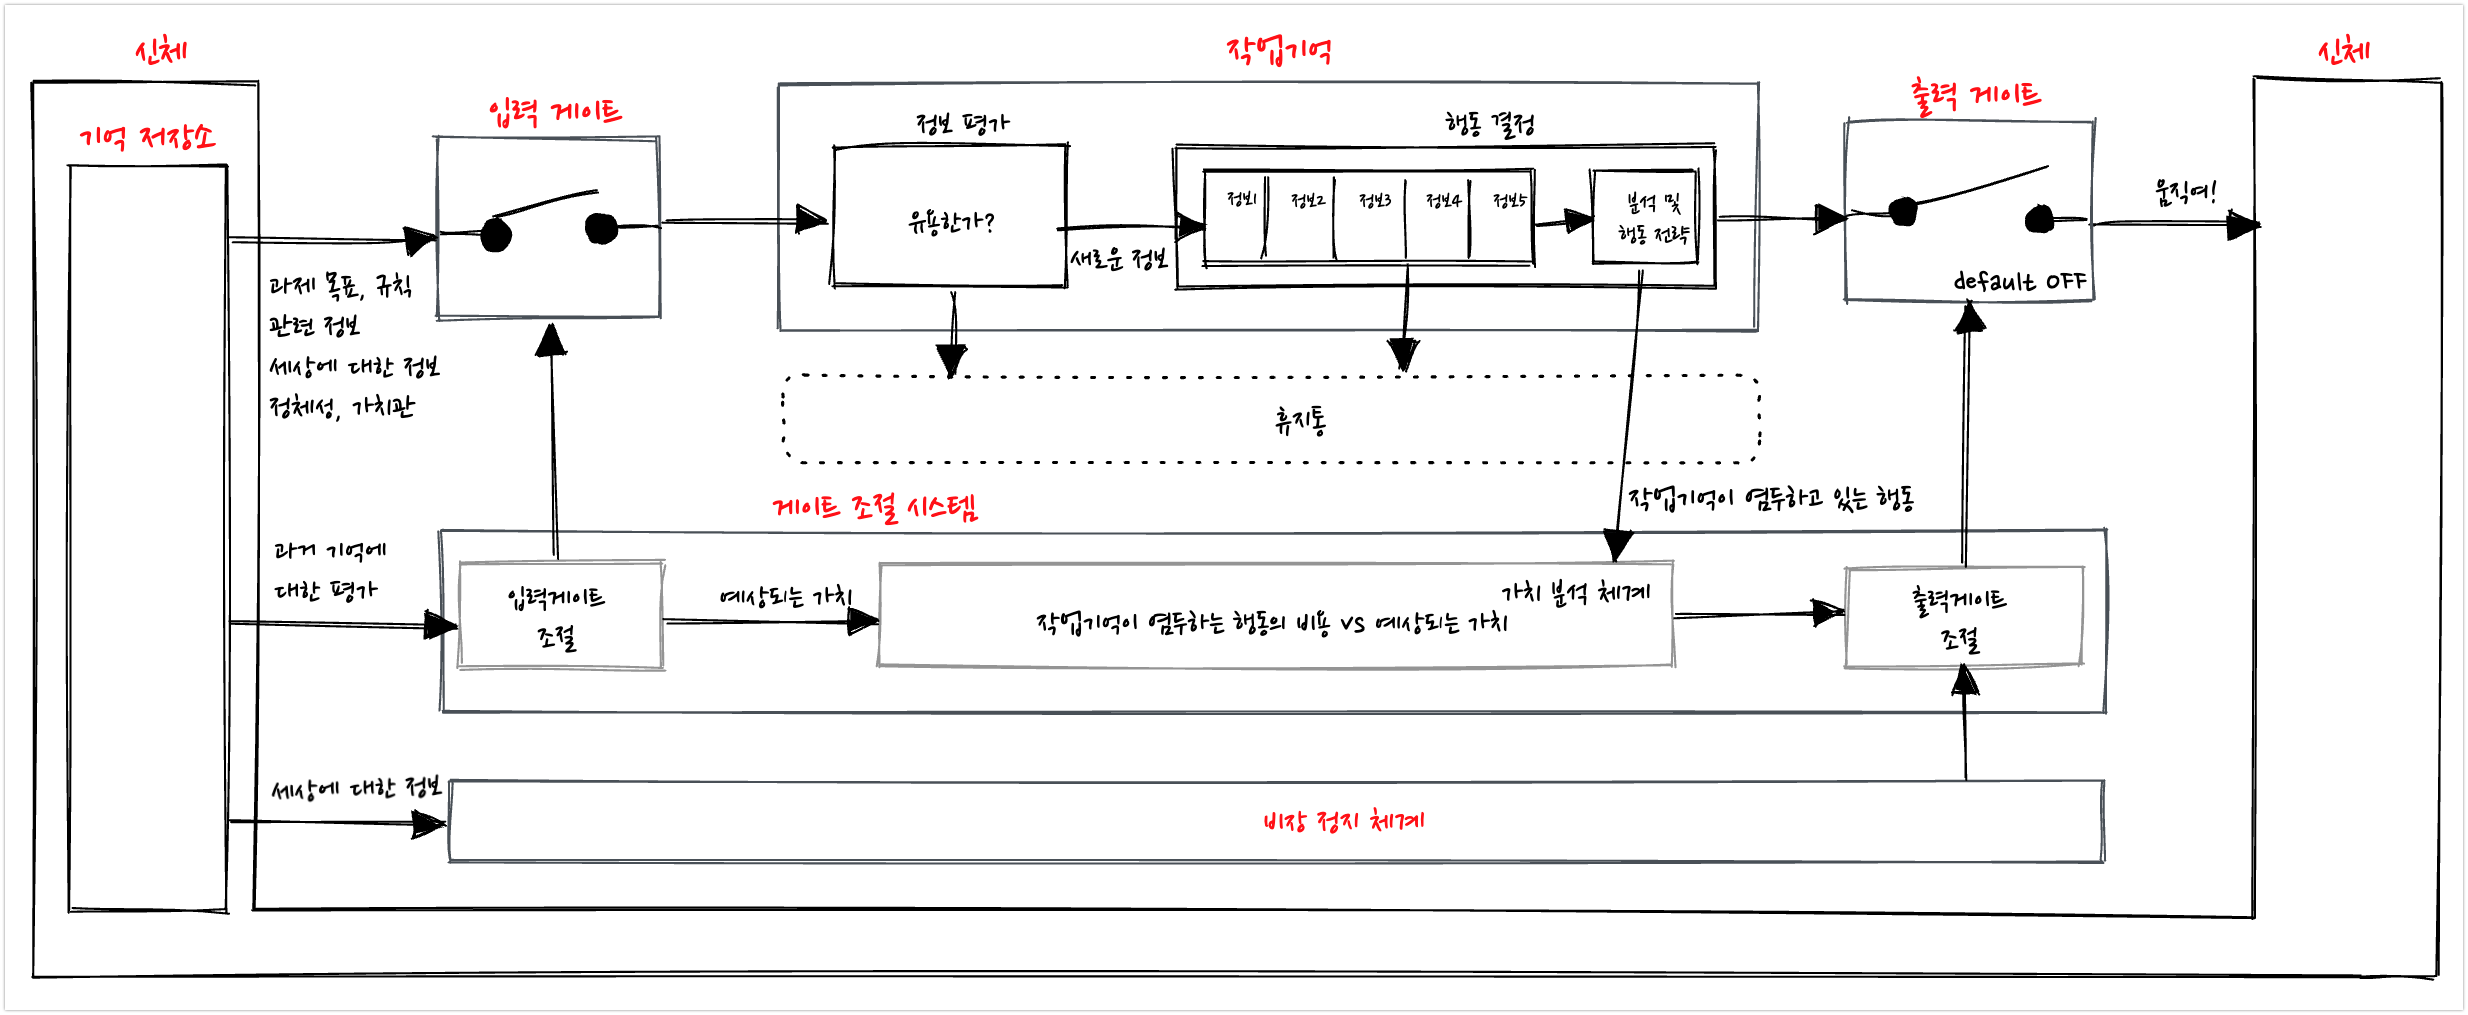 Working Memory Gate System Diagram